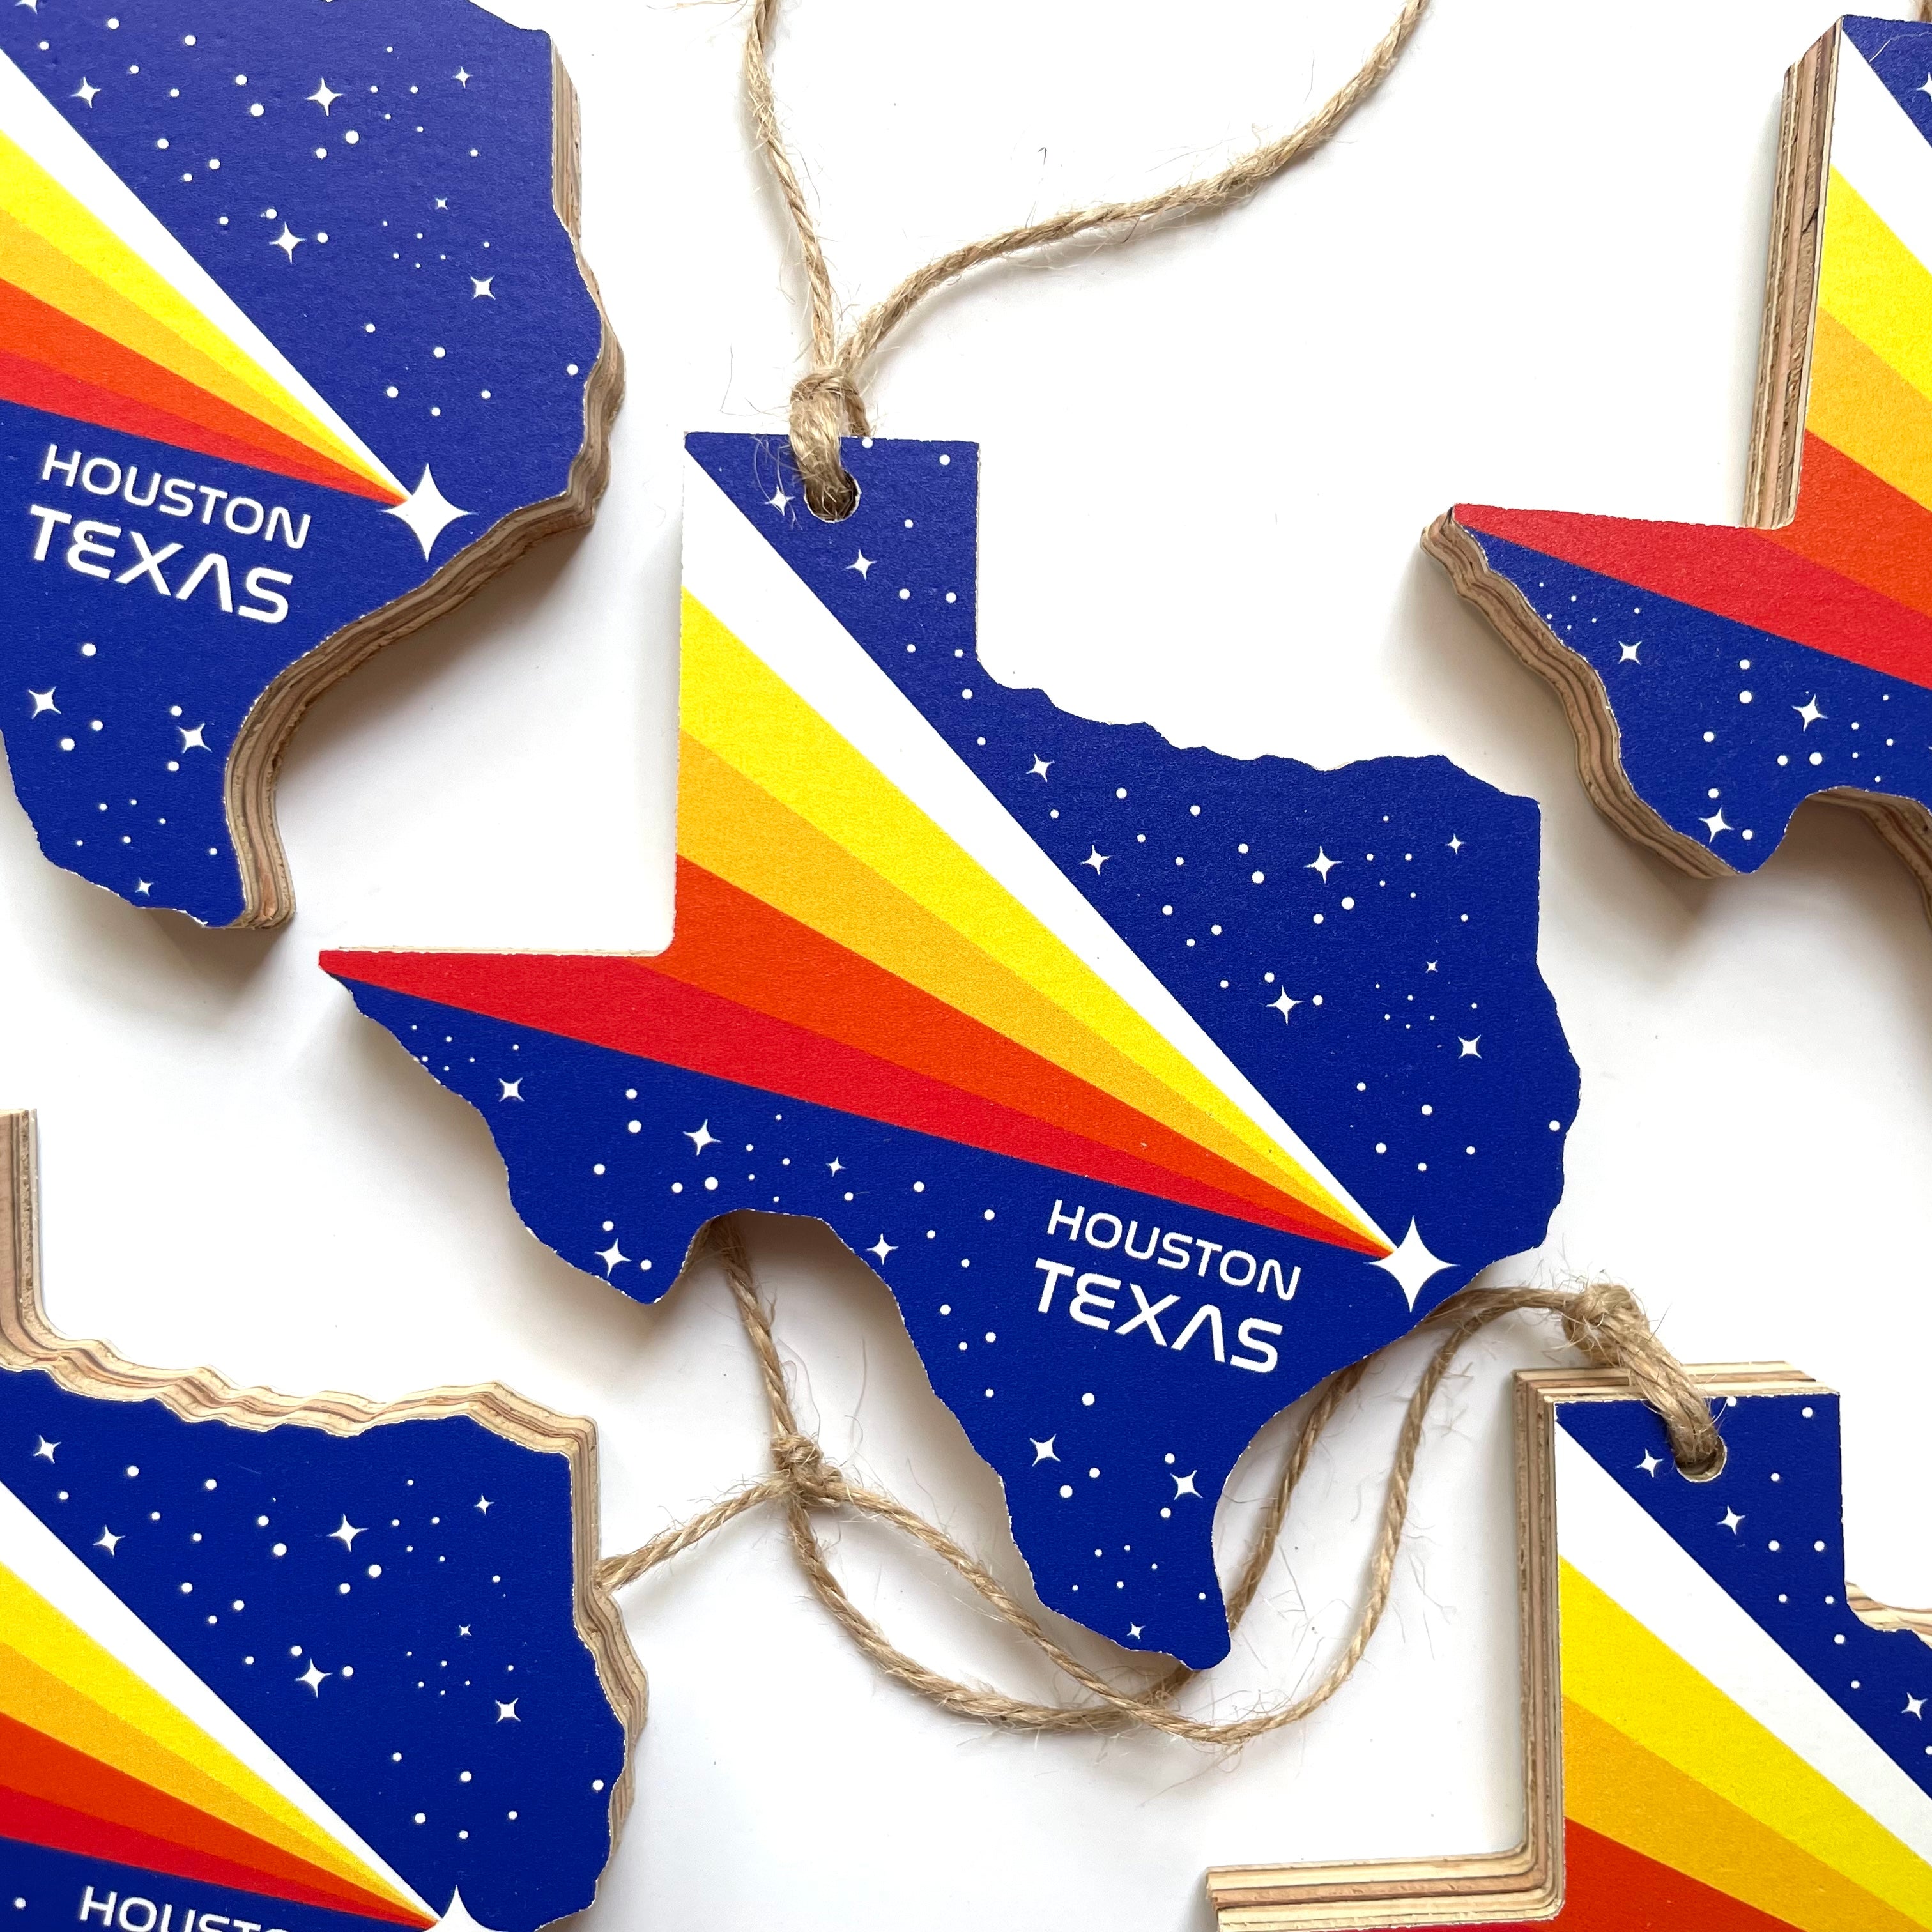 Houston Texas Ornaments